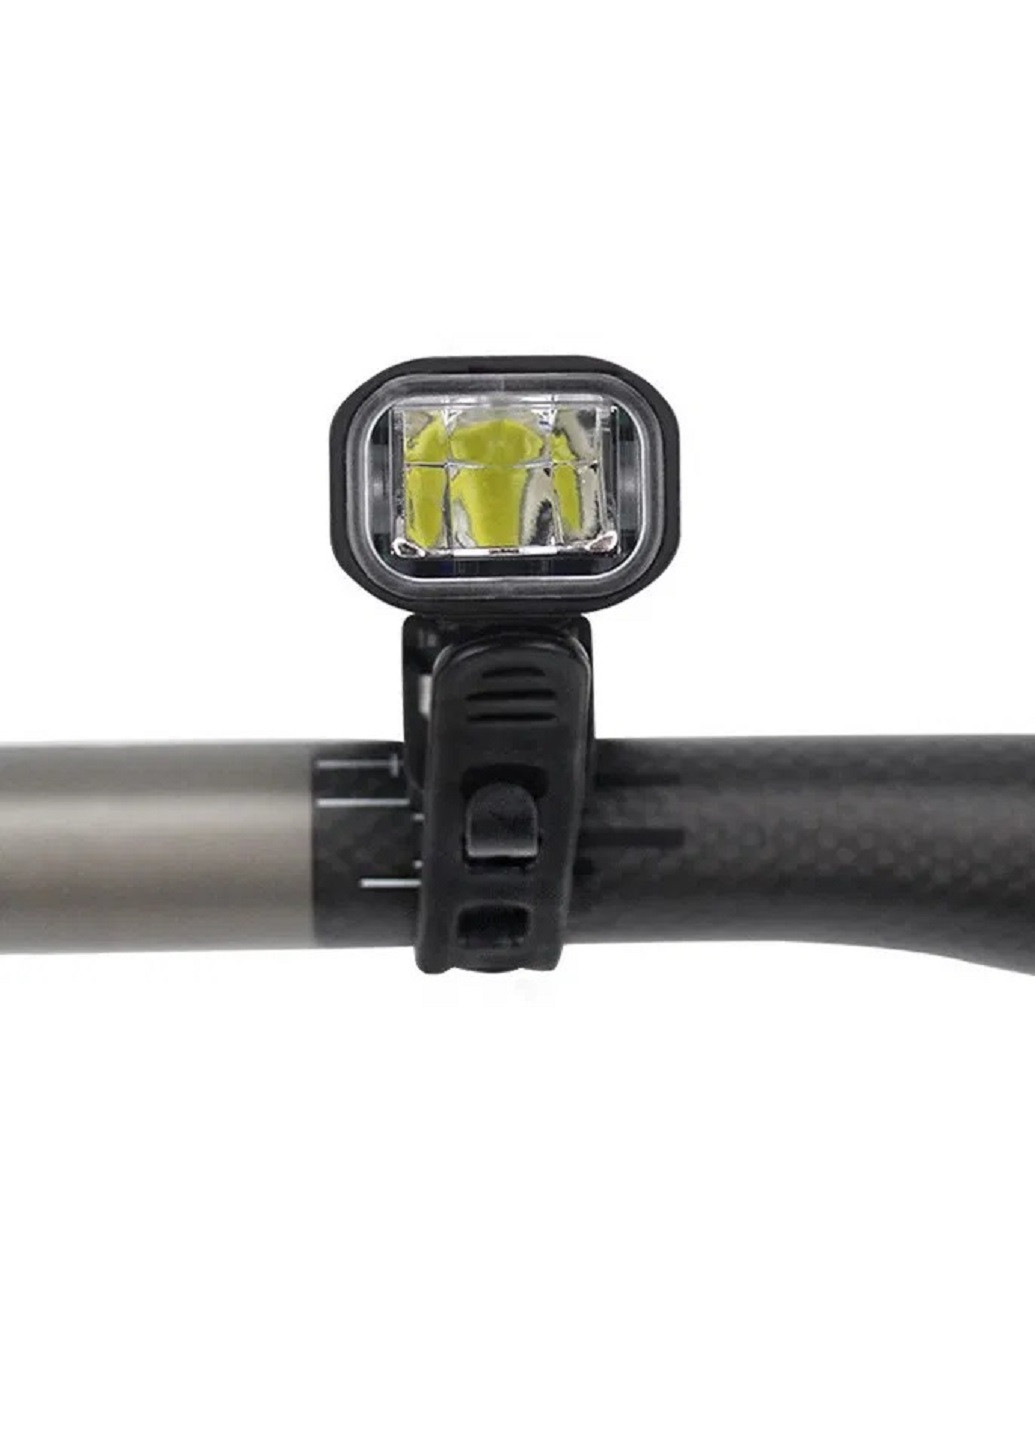 Велосипедная фара велофара мини фонарь на аккумуляторе XPG-2 диод IPX защита водонепроницаемая (18664-Нов) Francesco Marconi (252816027)